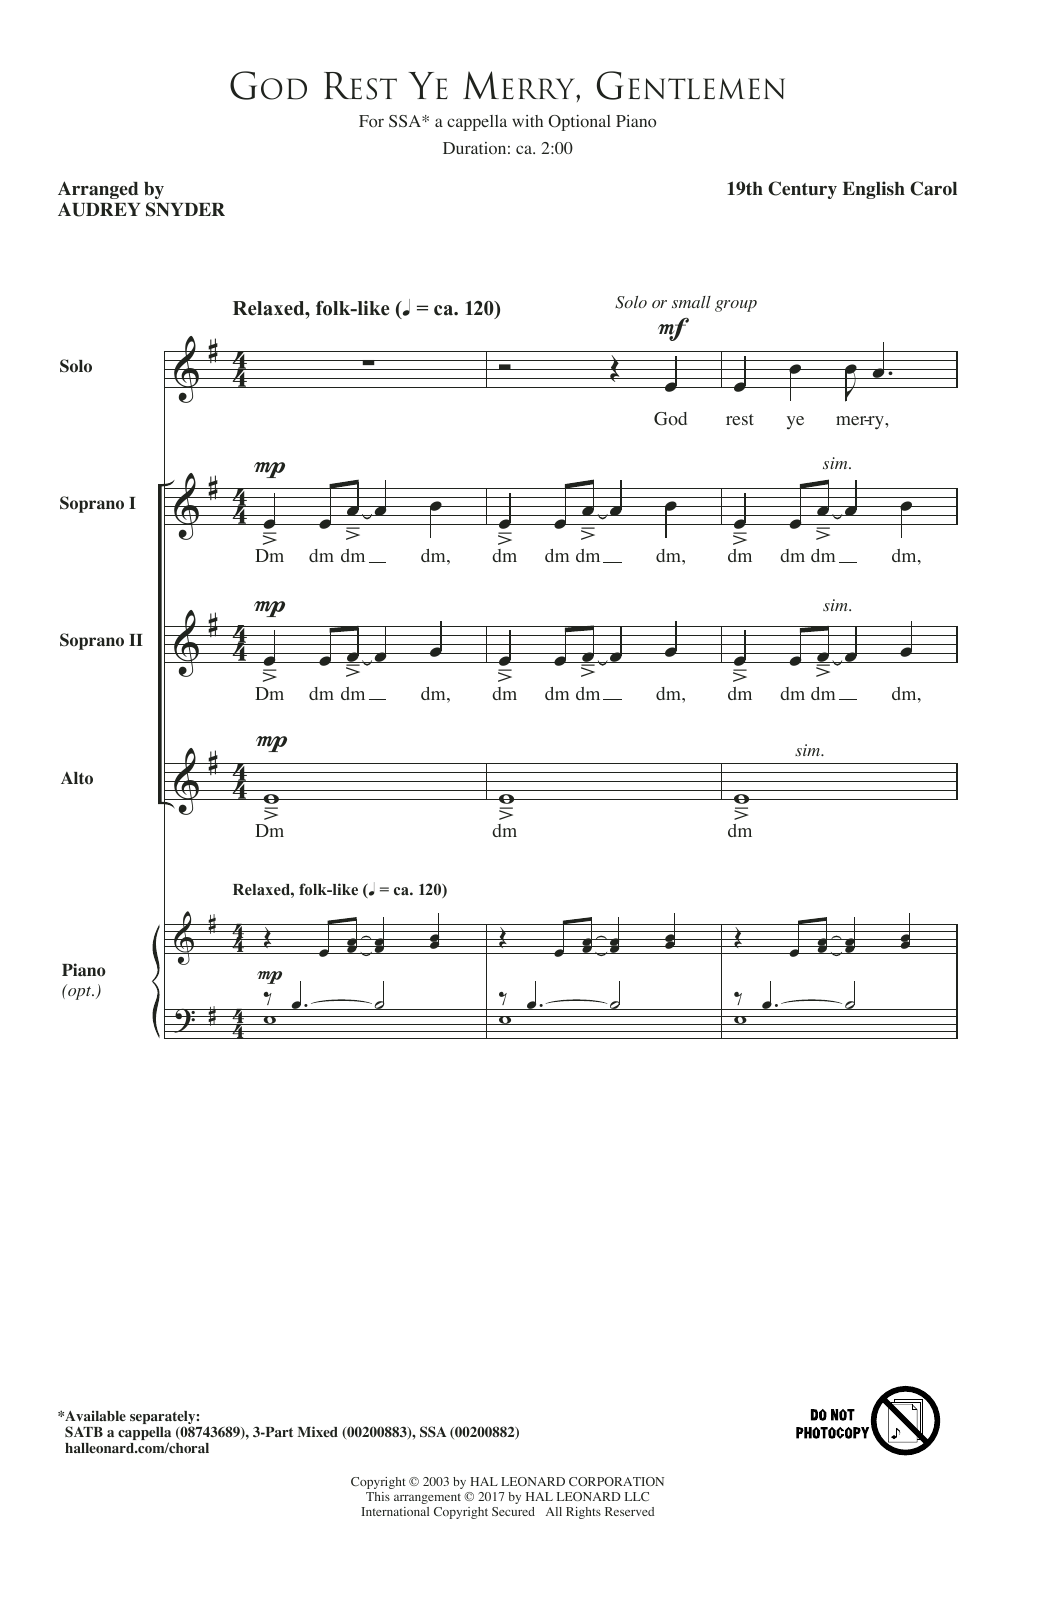 Audrey Snyder God Rest Ye Merry, Gentlemen Sheet Music Notes & Chords for SSA - Download or Print PDF